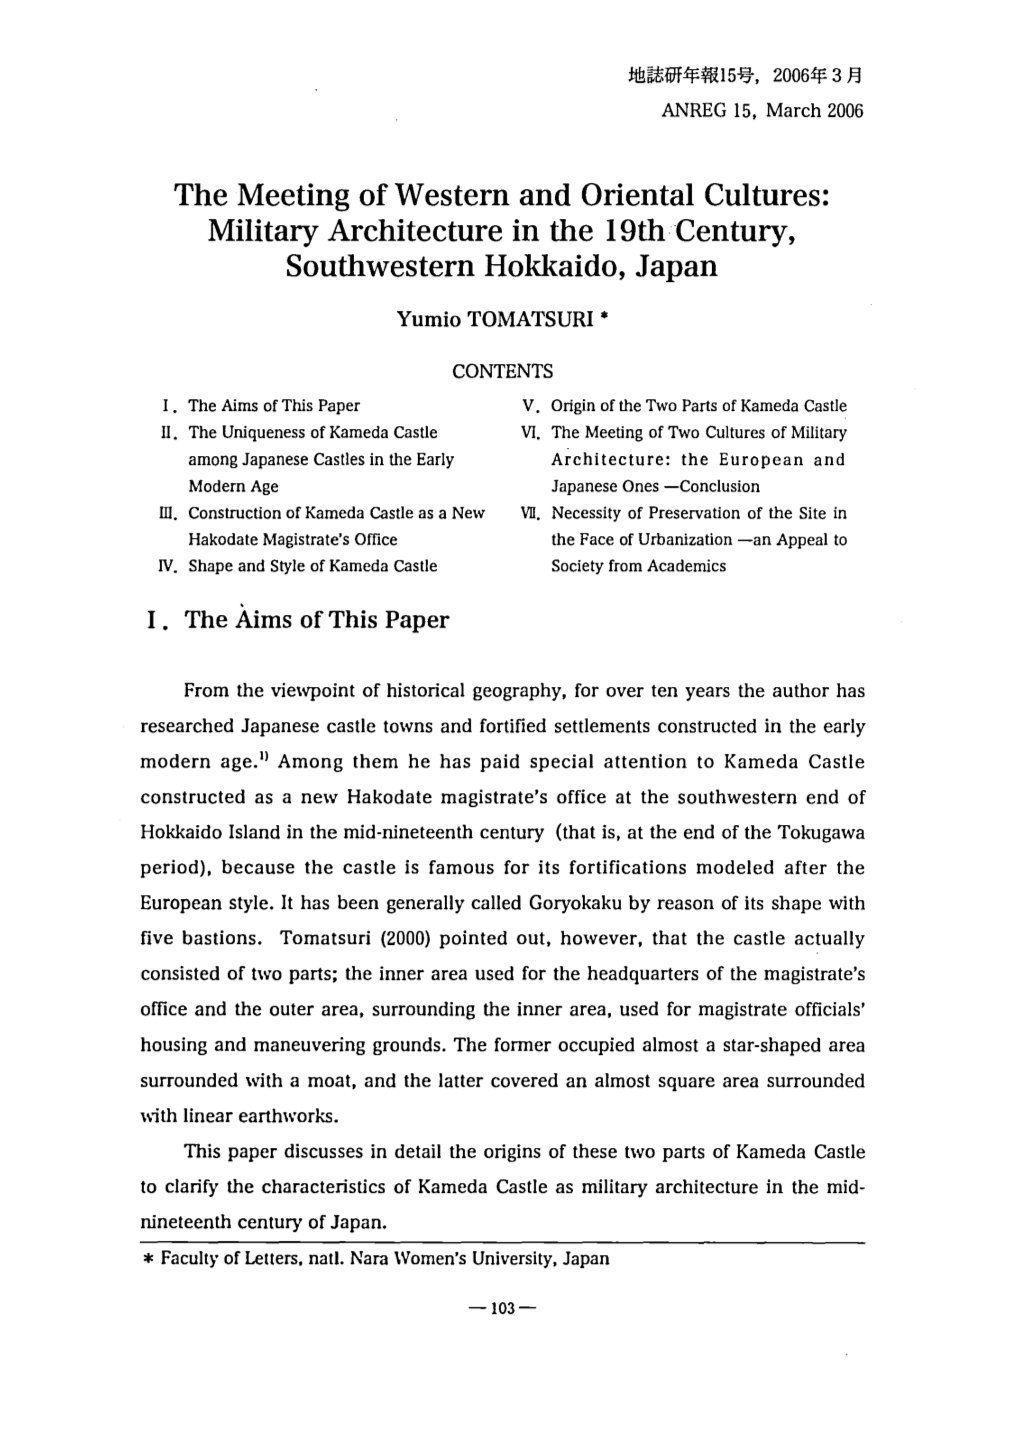 Military Architecture in the 19Th Century, Southwestern Hokkaido, Japan